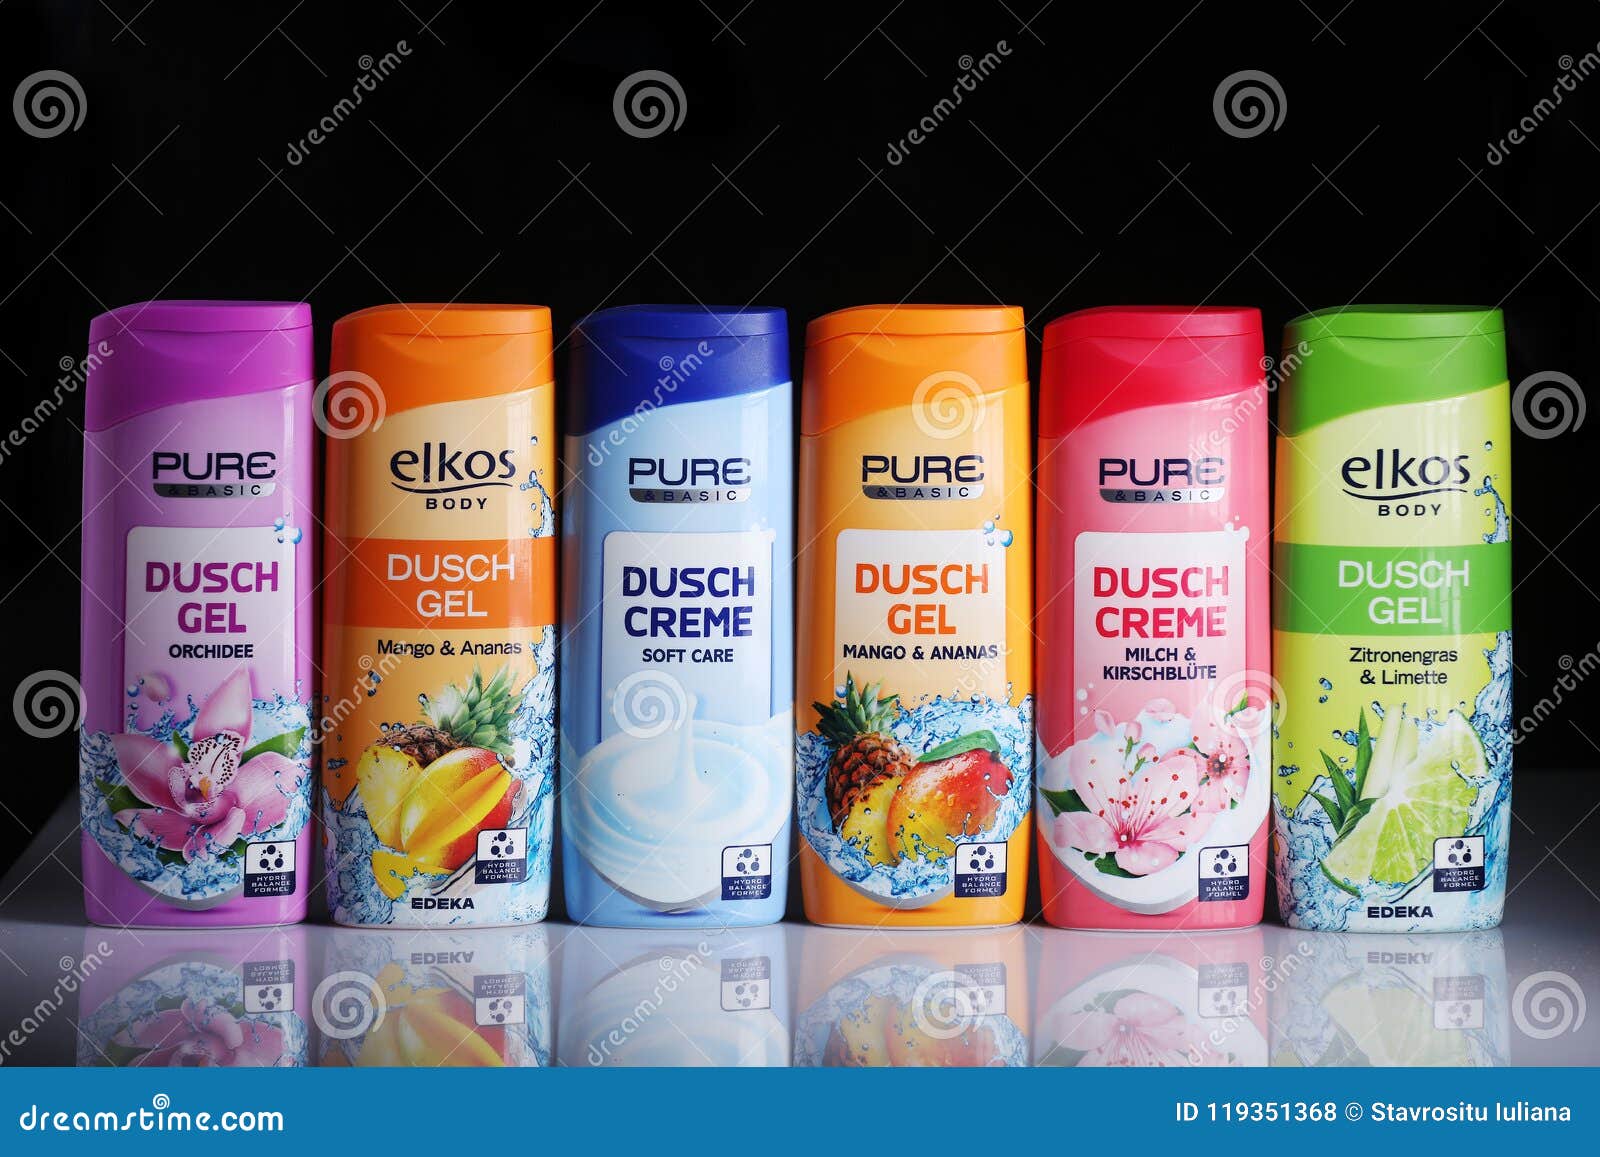 https://thumbs.dreamstime.com/z/elkos-shower-gel-mango-pineapple-flavour-isolated-elkos-shower-gel-various-flavours-119351368.jpg